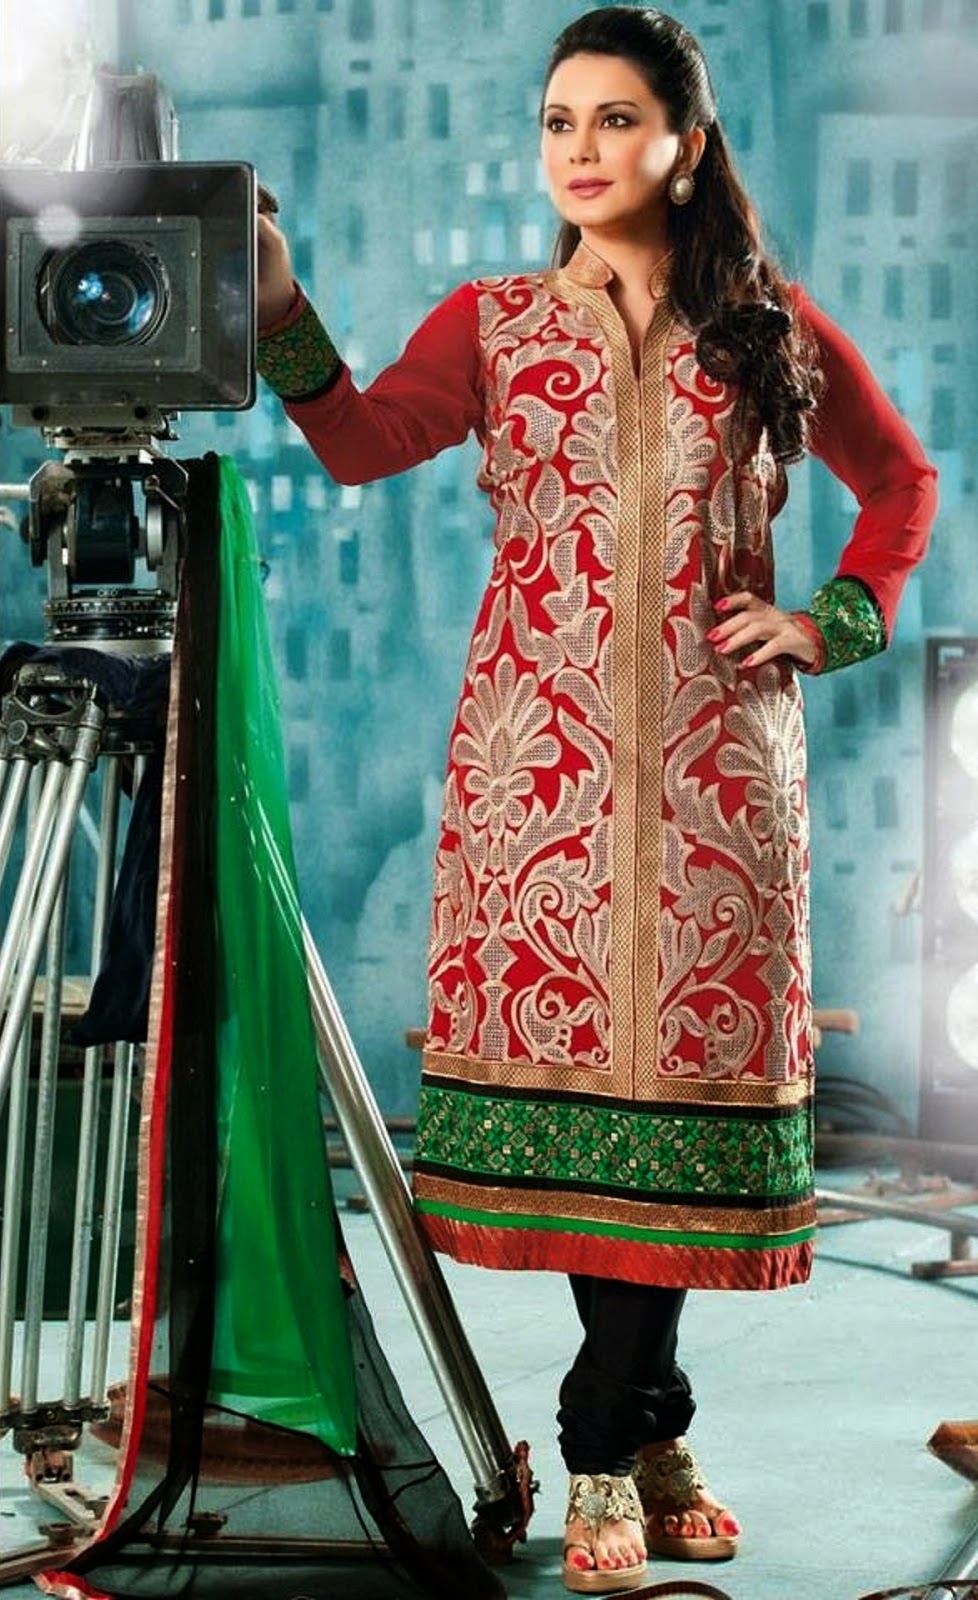 Beautiful Punjabi Suits For Actress Minissha Lamba Wallpapers Free Download